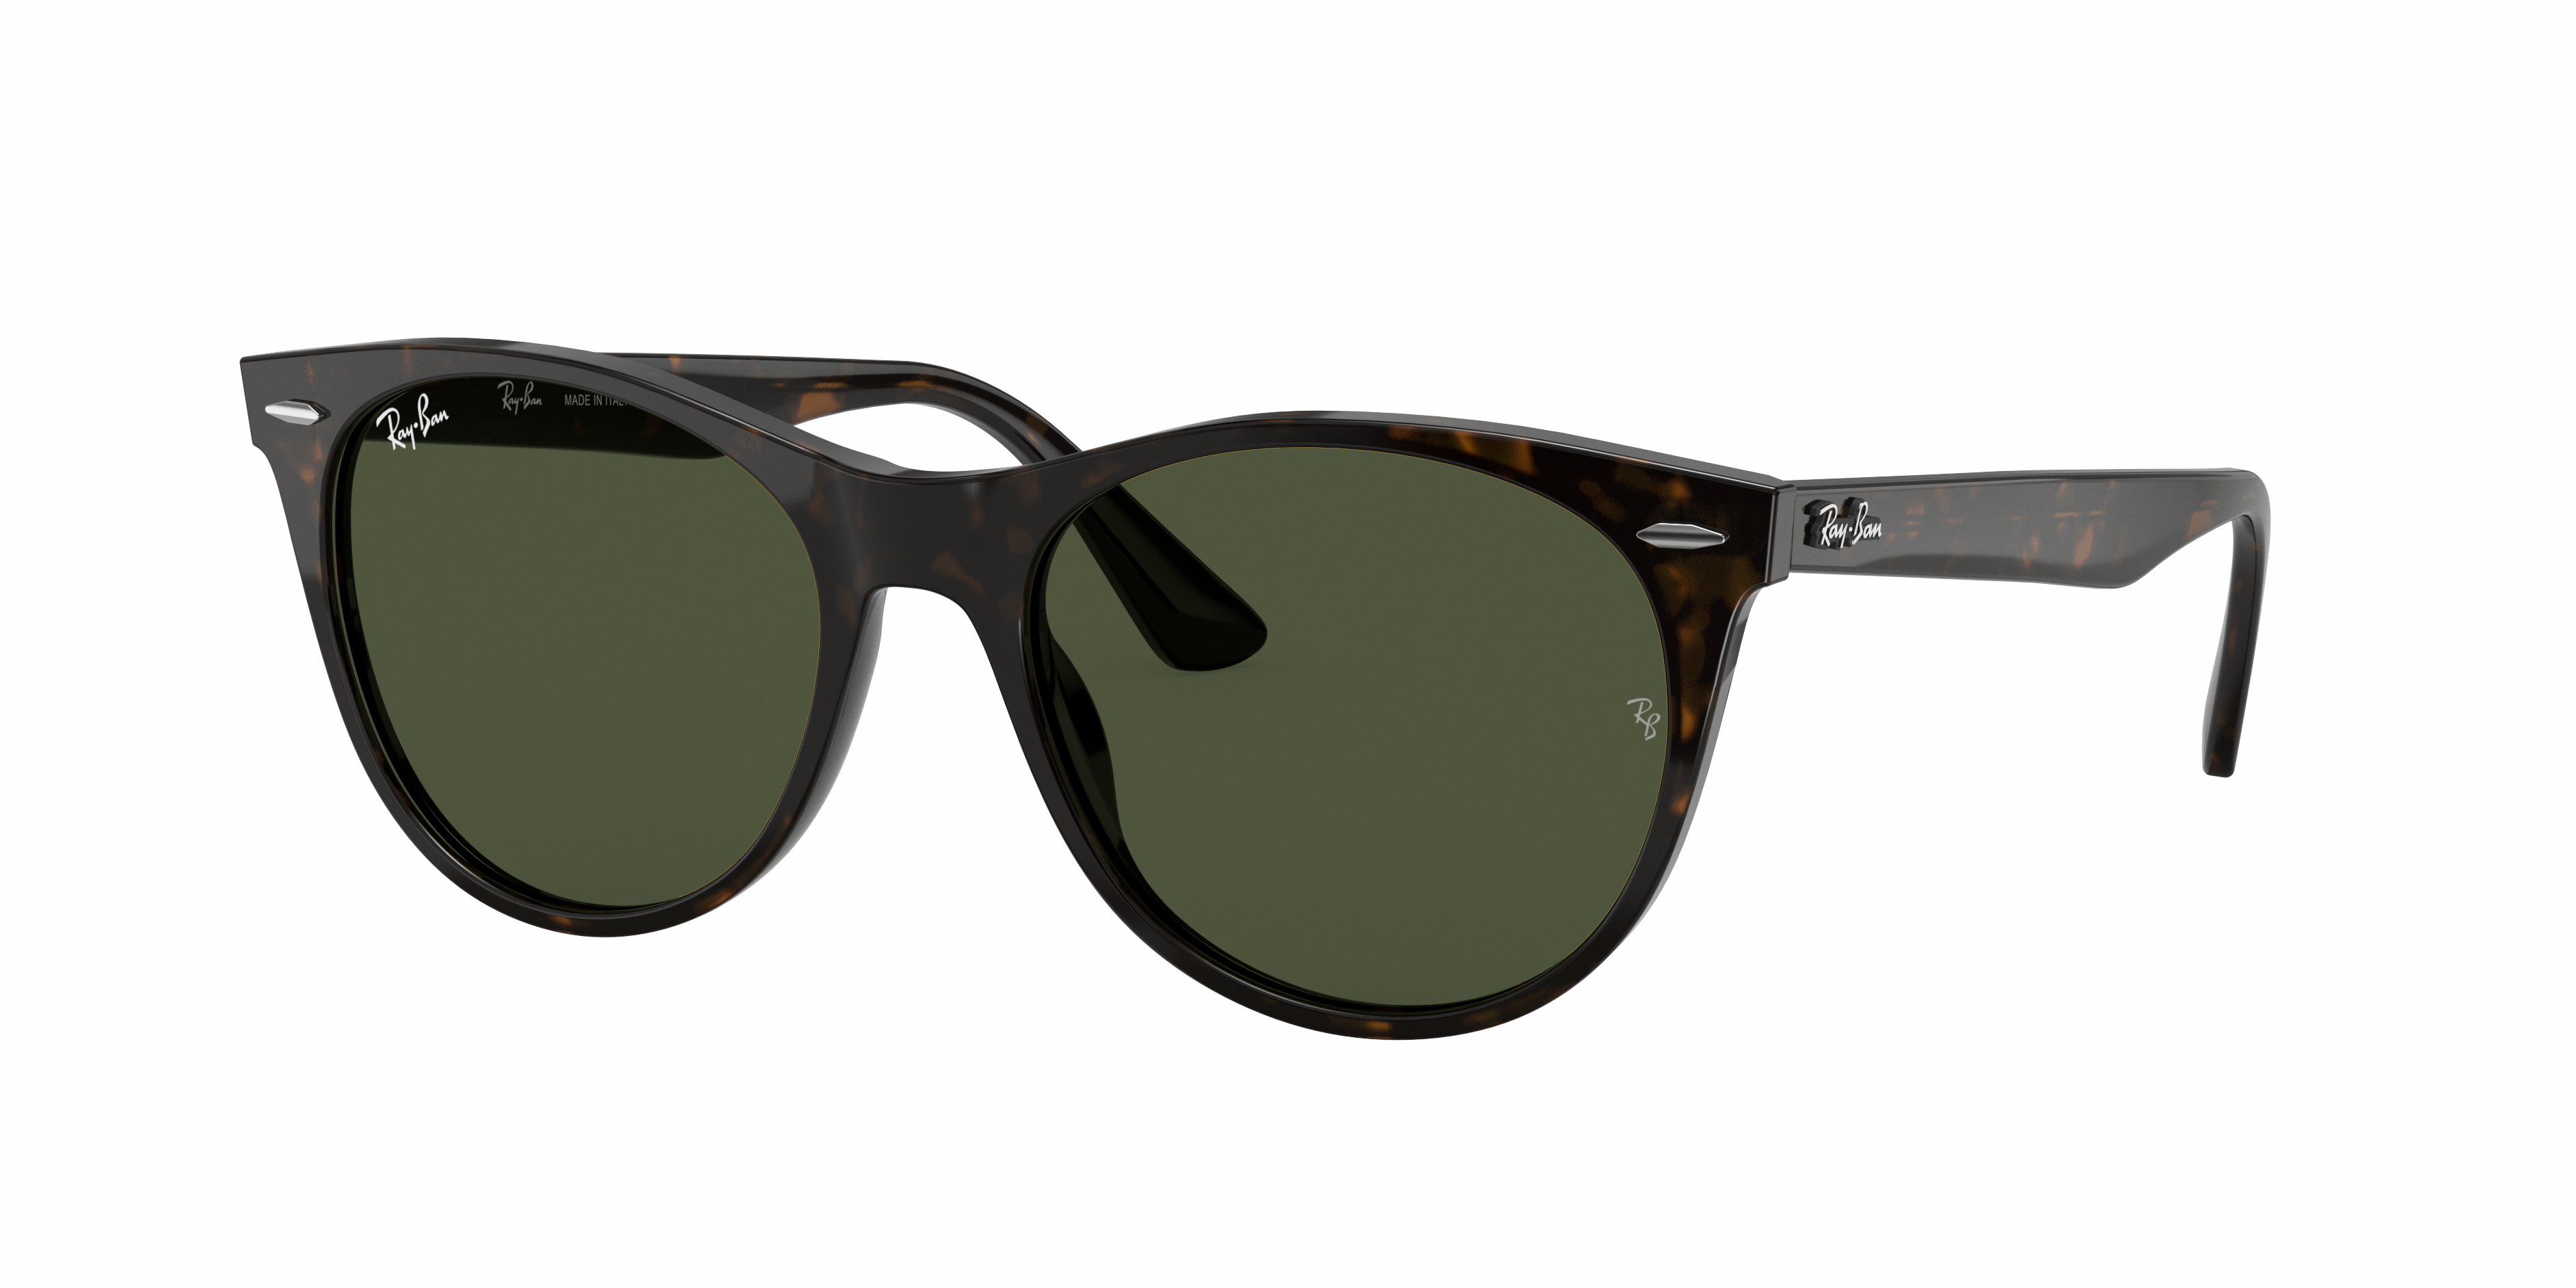 Wayfarer Ii Classic Sunglasses in Tartaruga and Verde | Ray-Ban®